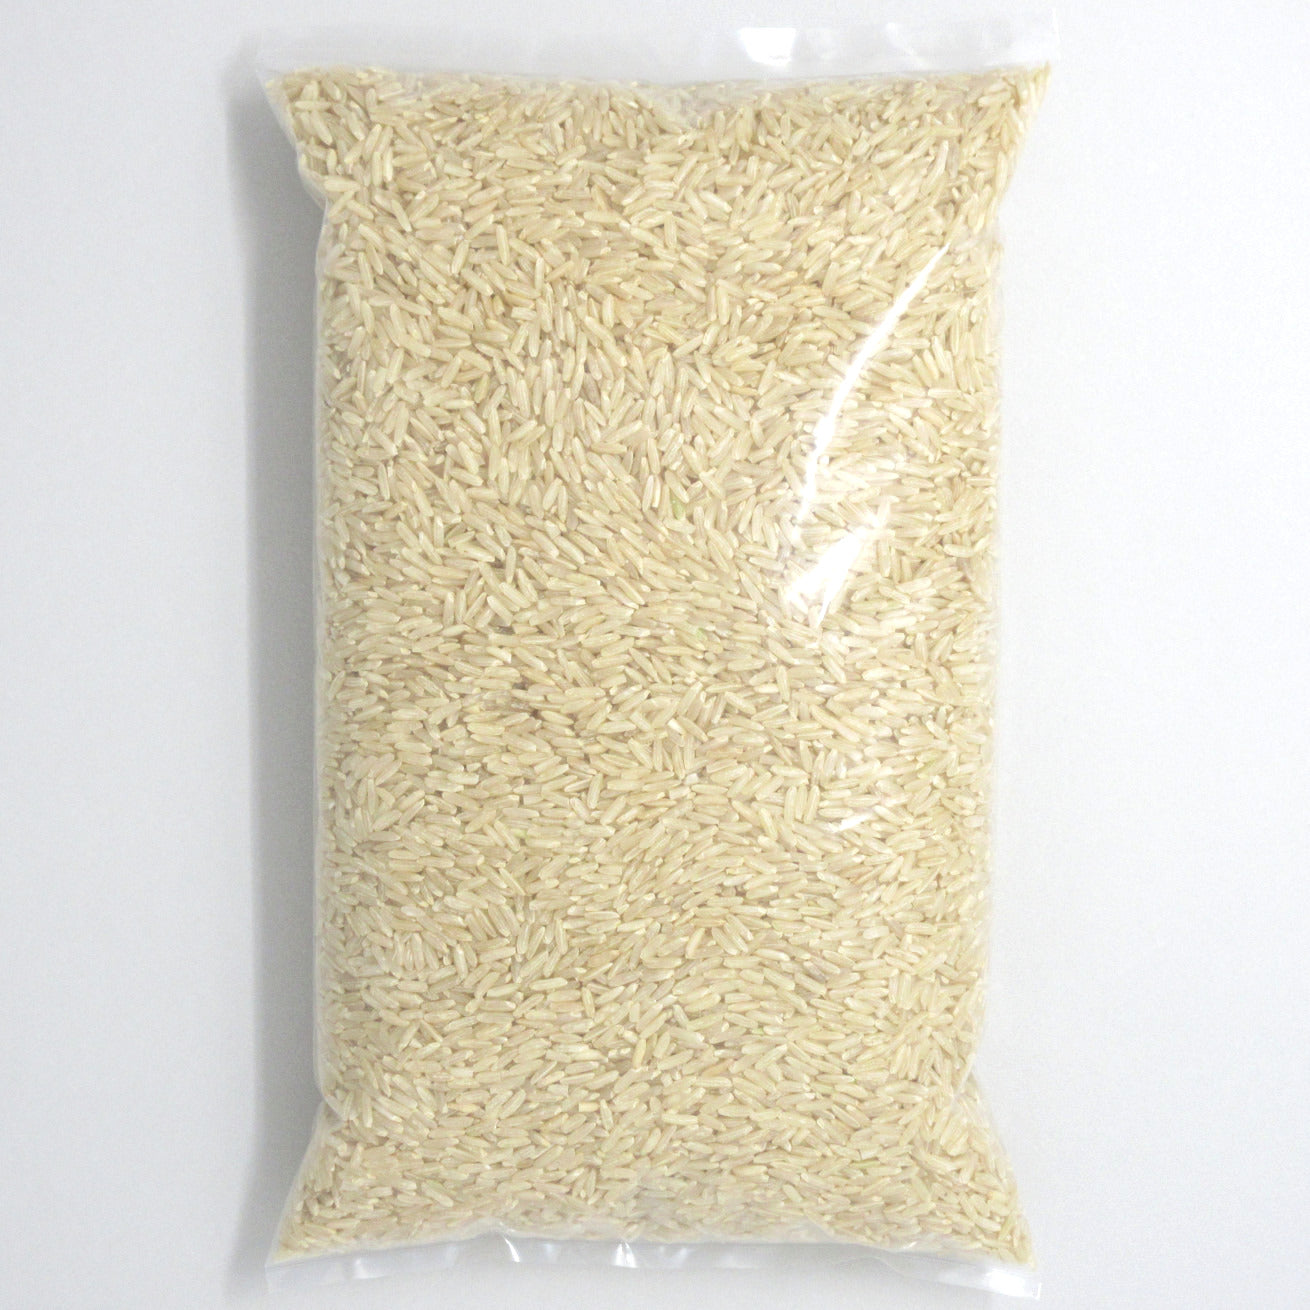 Flour Barrel product image - Organic Long Grain Brown Rice